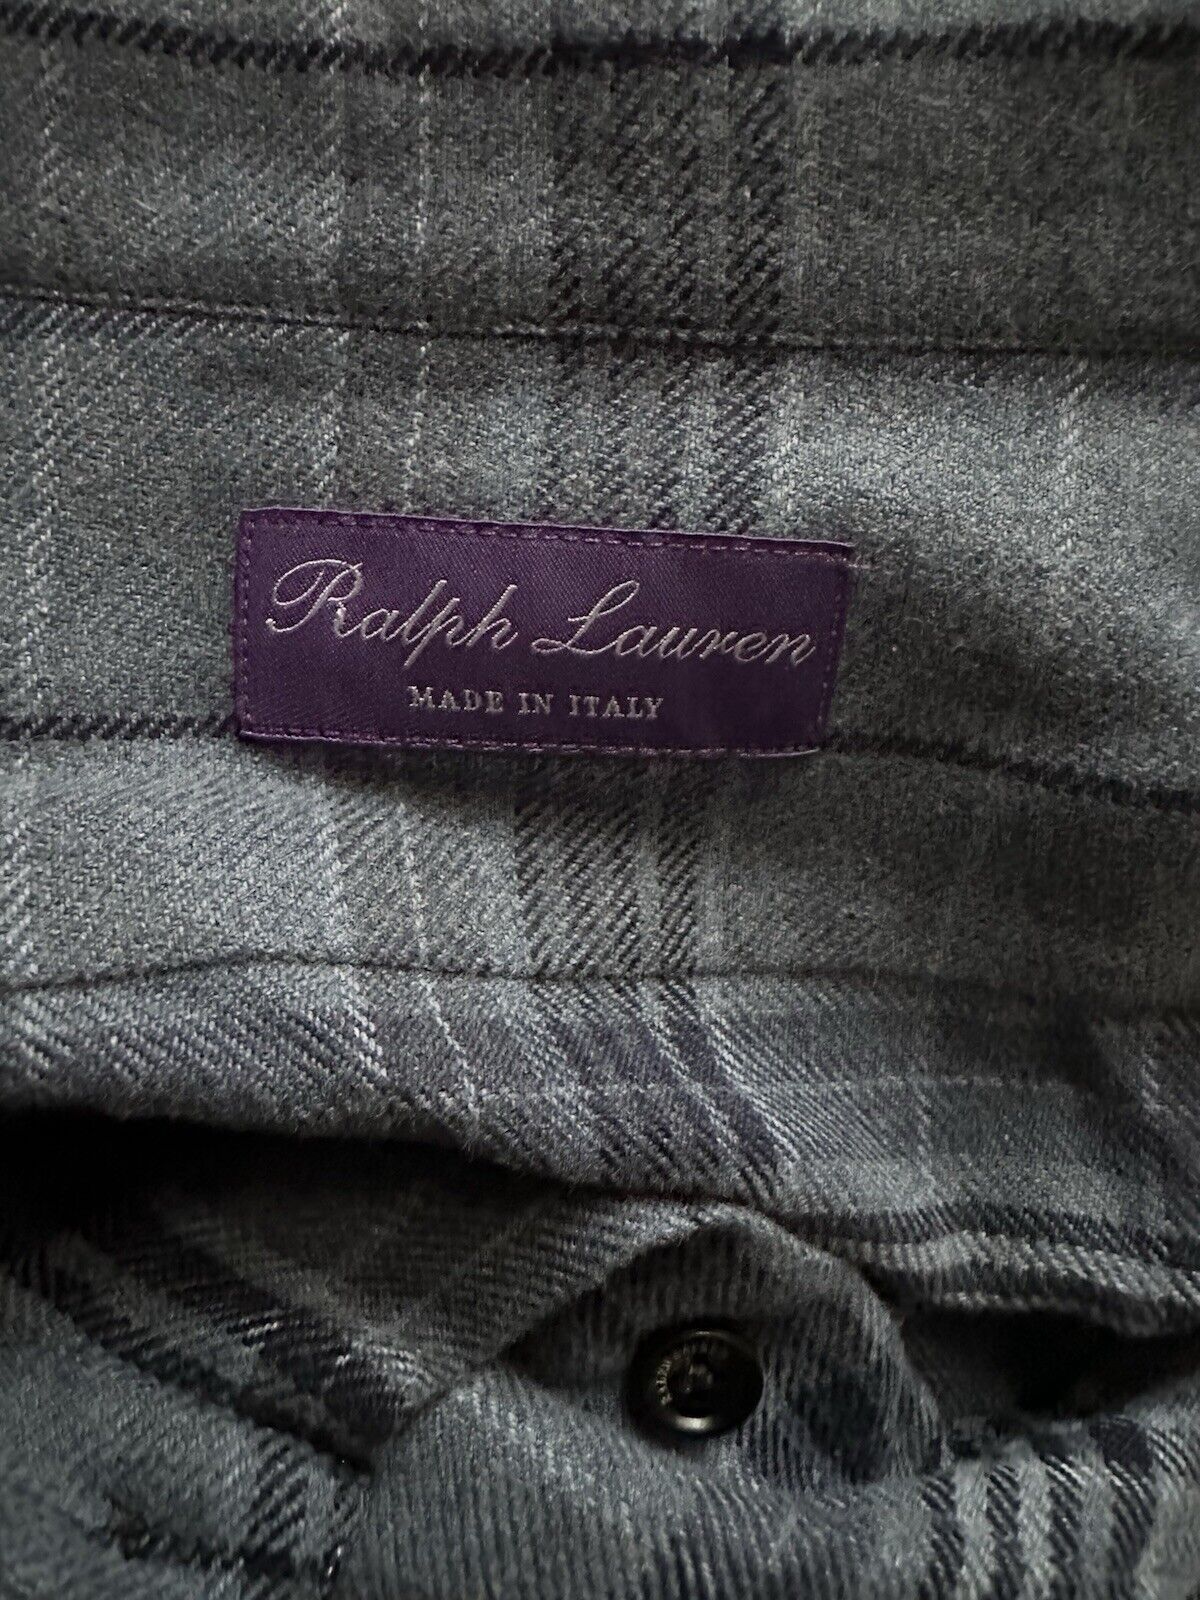 Ralph Lauren Purple Label Langley Plaid Cotton Men's Shirt 2XL Italy NWT $595